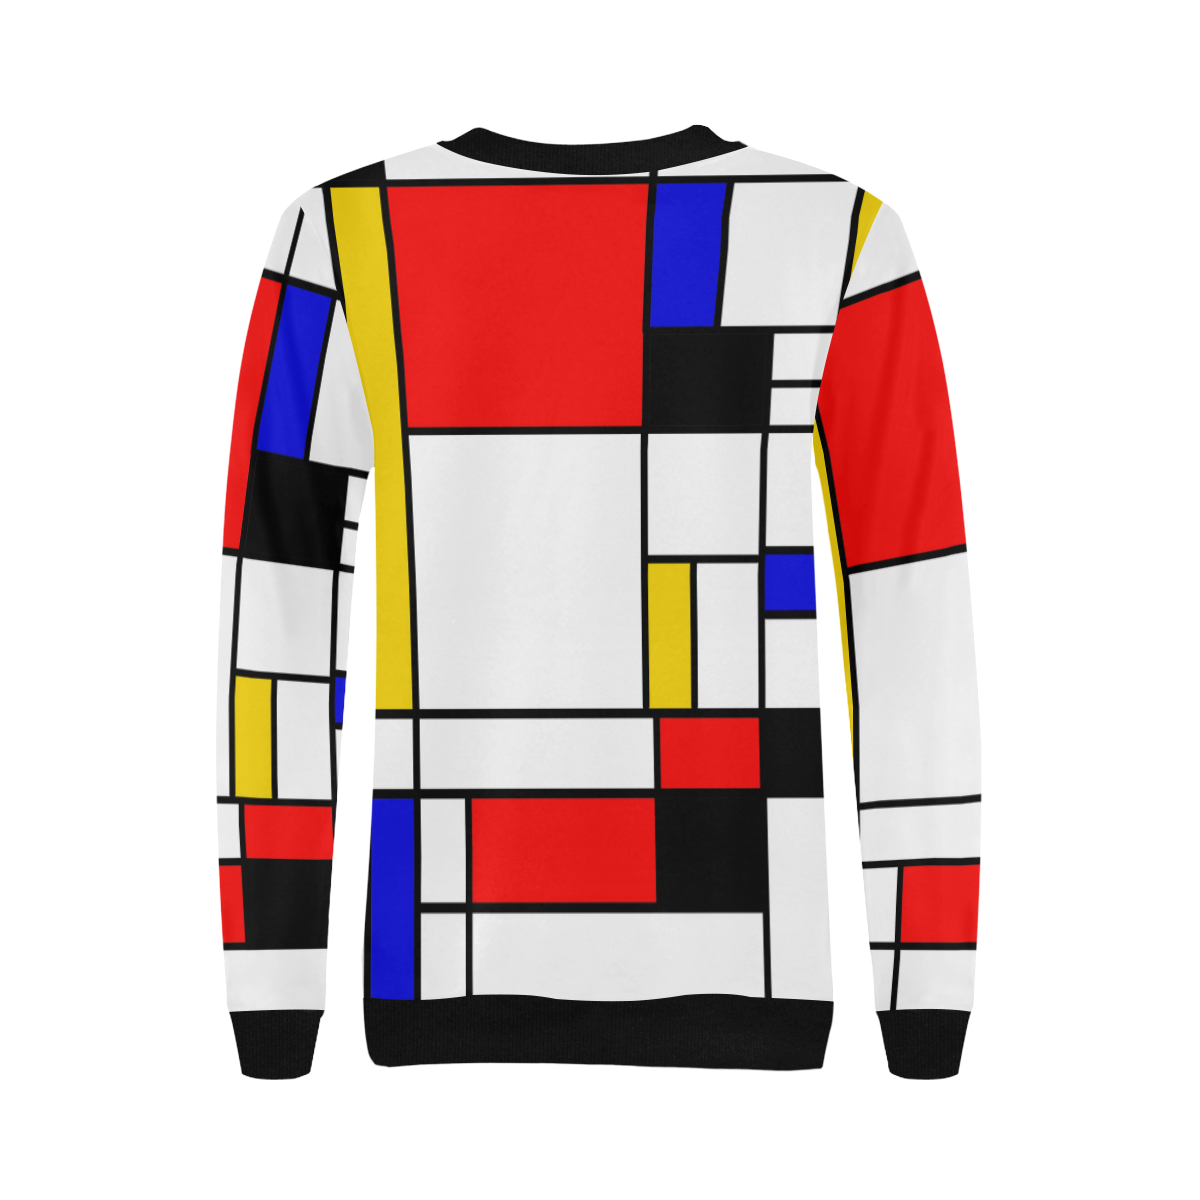 Bauhouse Composition Mondrian Style Women's Rib Cuff Crew Neck Sweatshirt (Model H34)